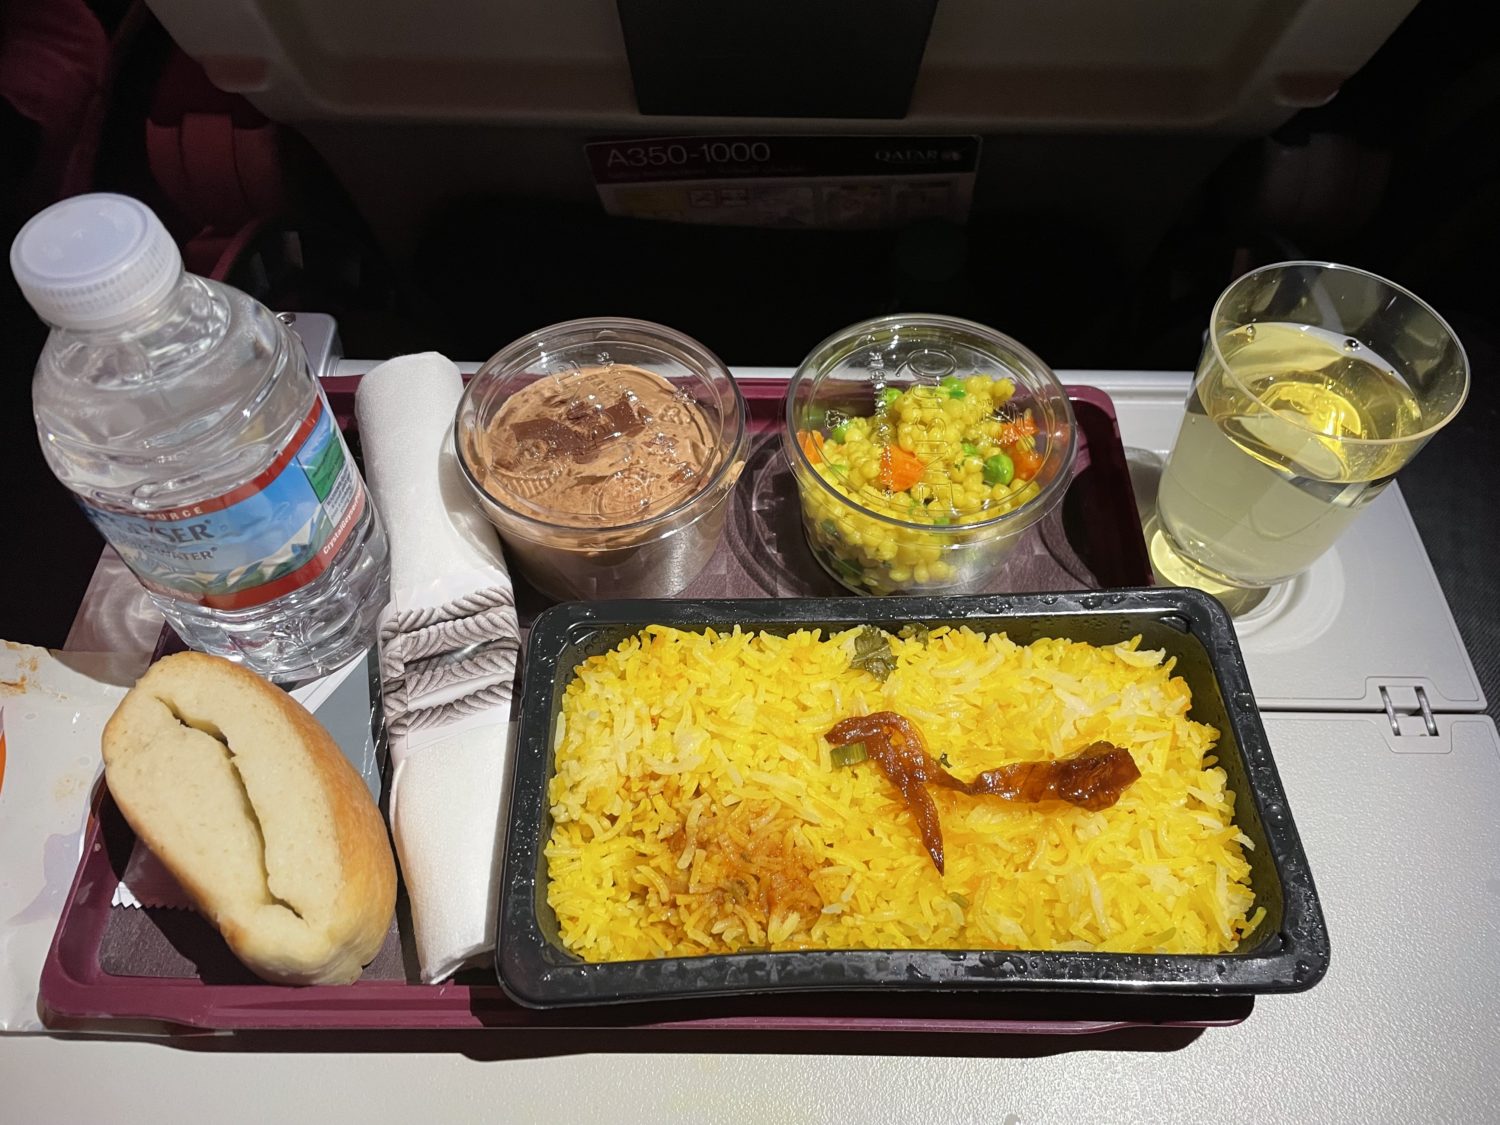 Qatar Airways Economy Review